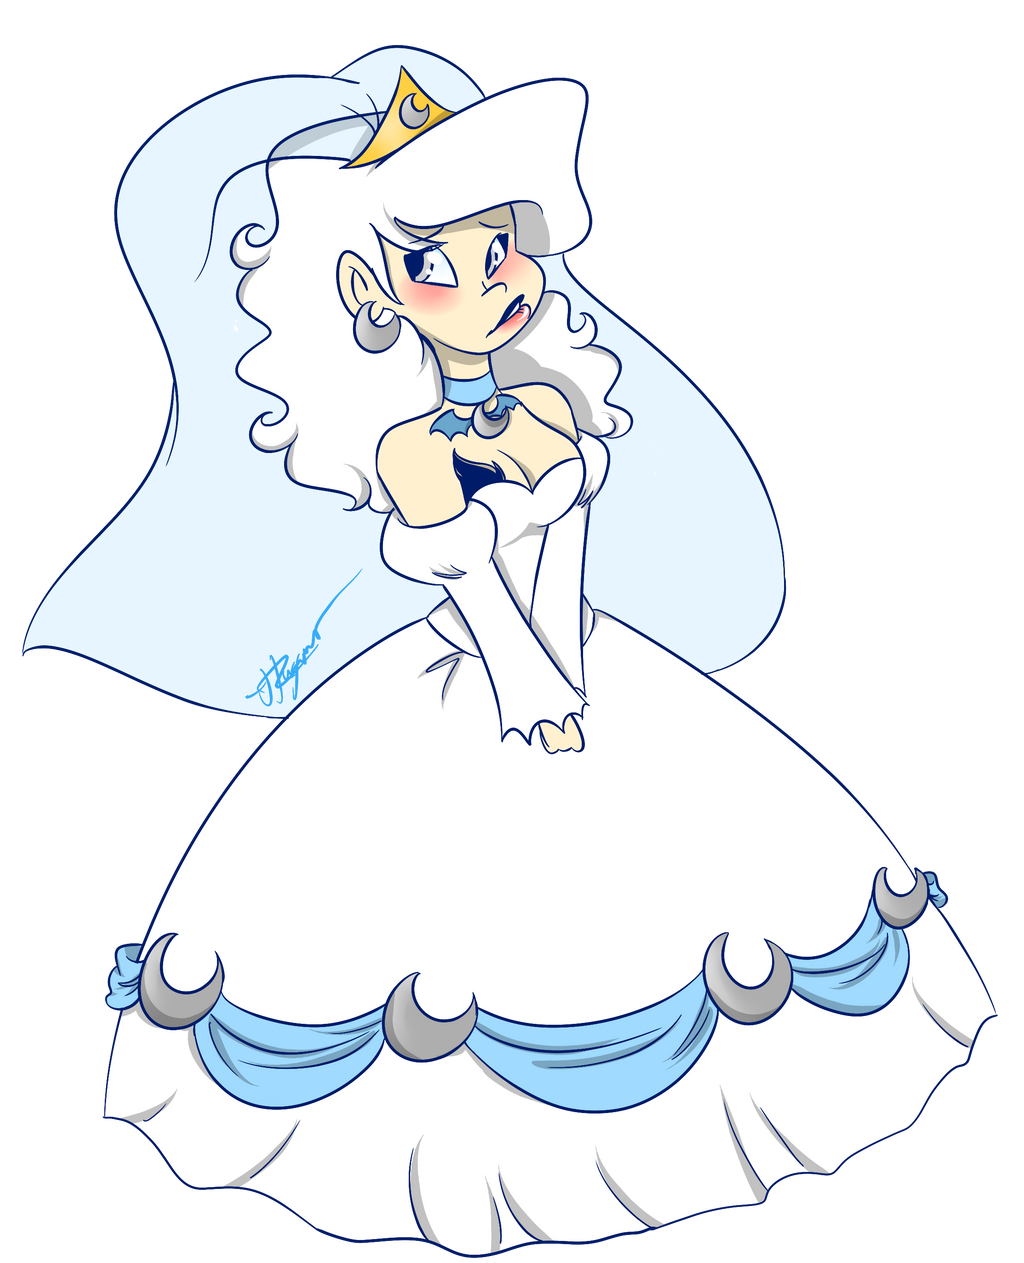 Here comes the Bride